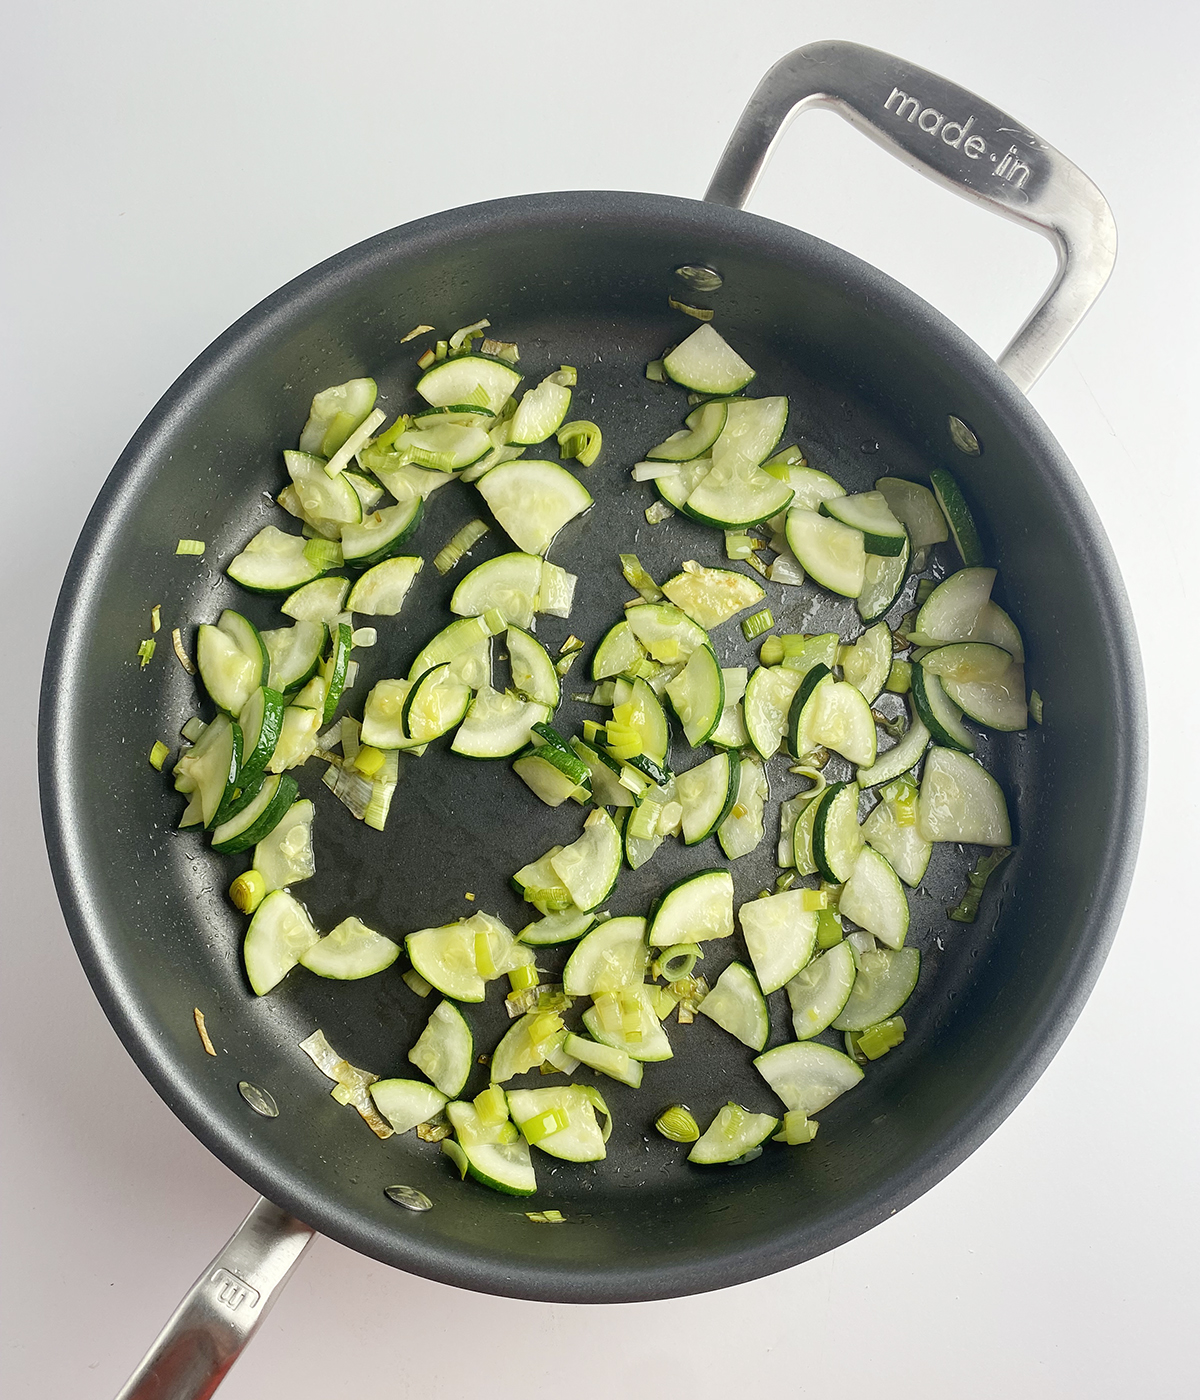 Sauteed zucchini in a skillet.